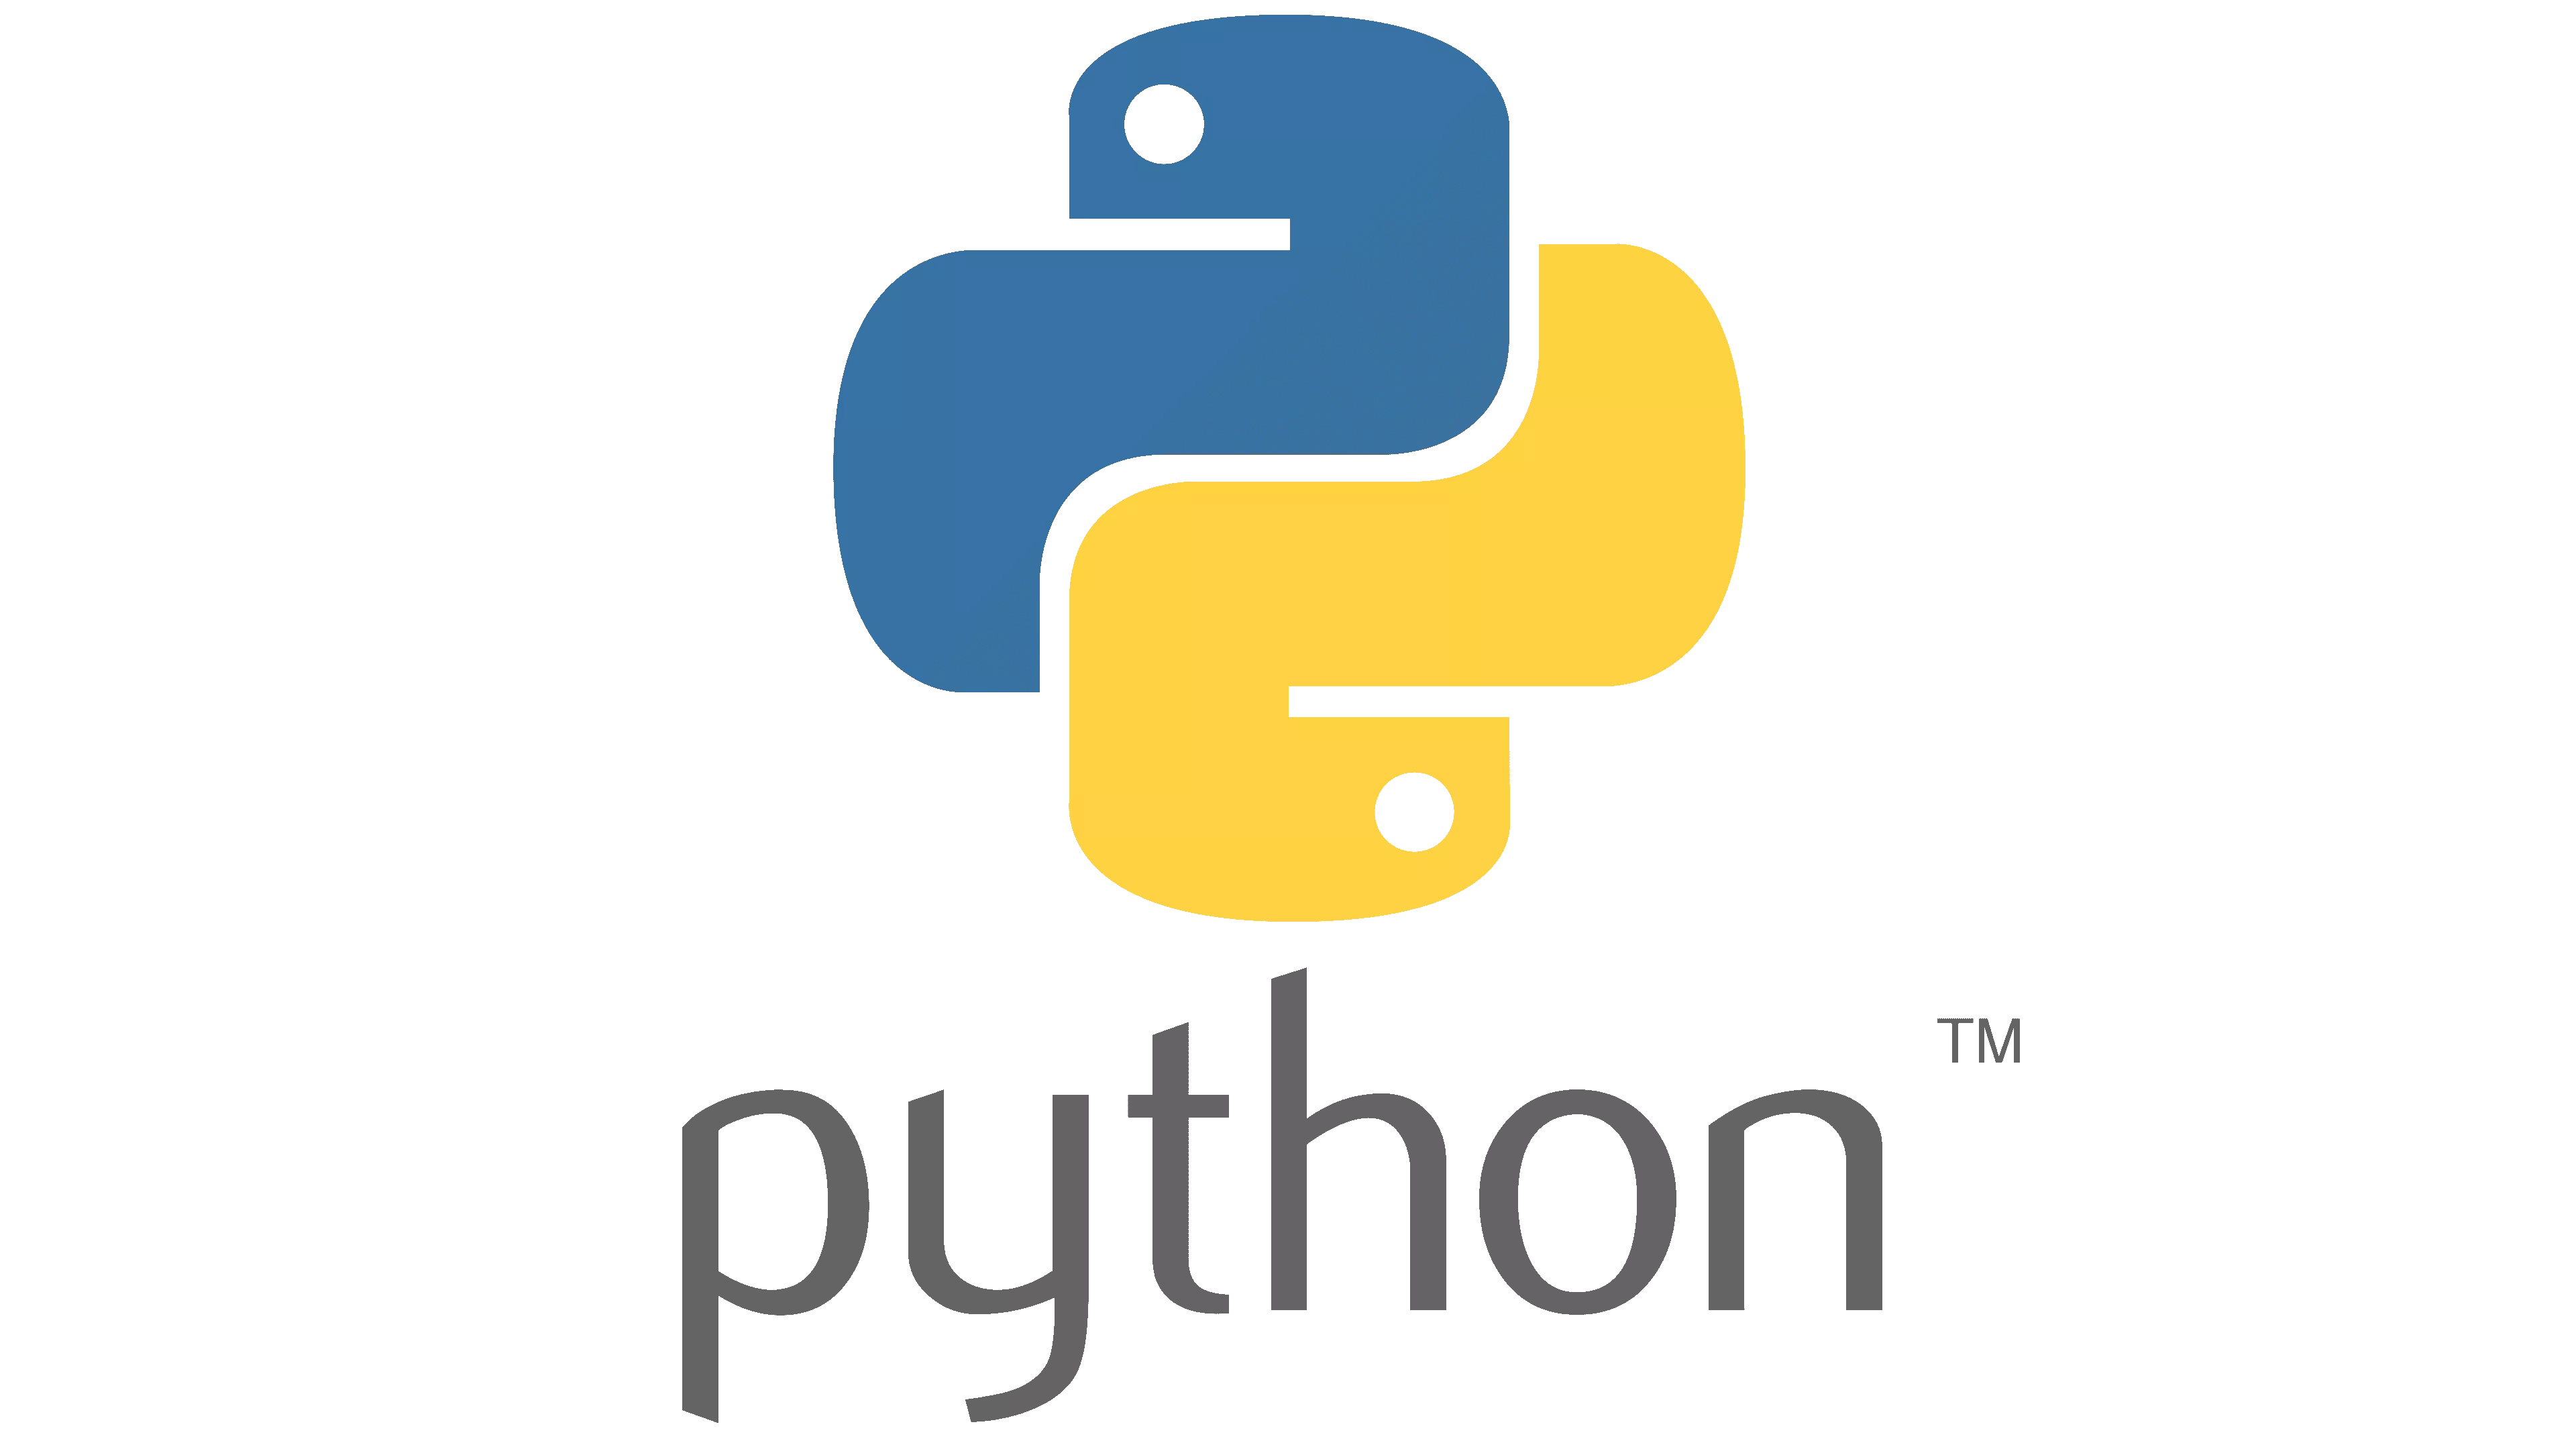 Python Nedir ?